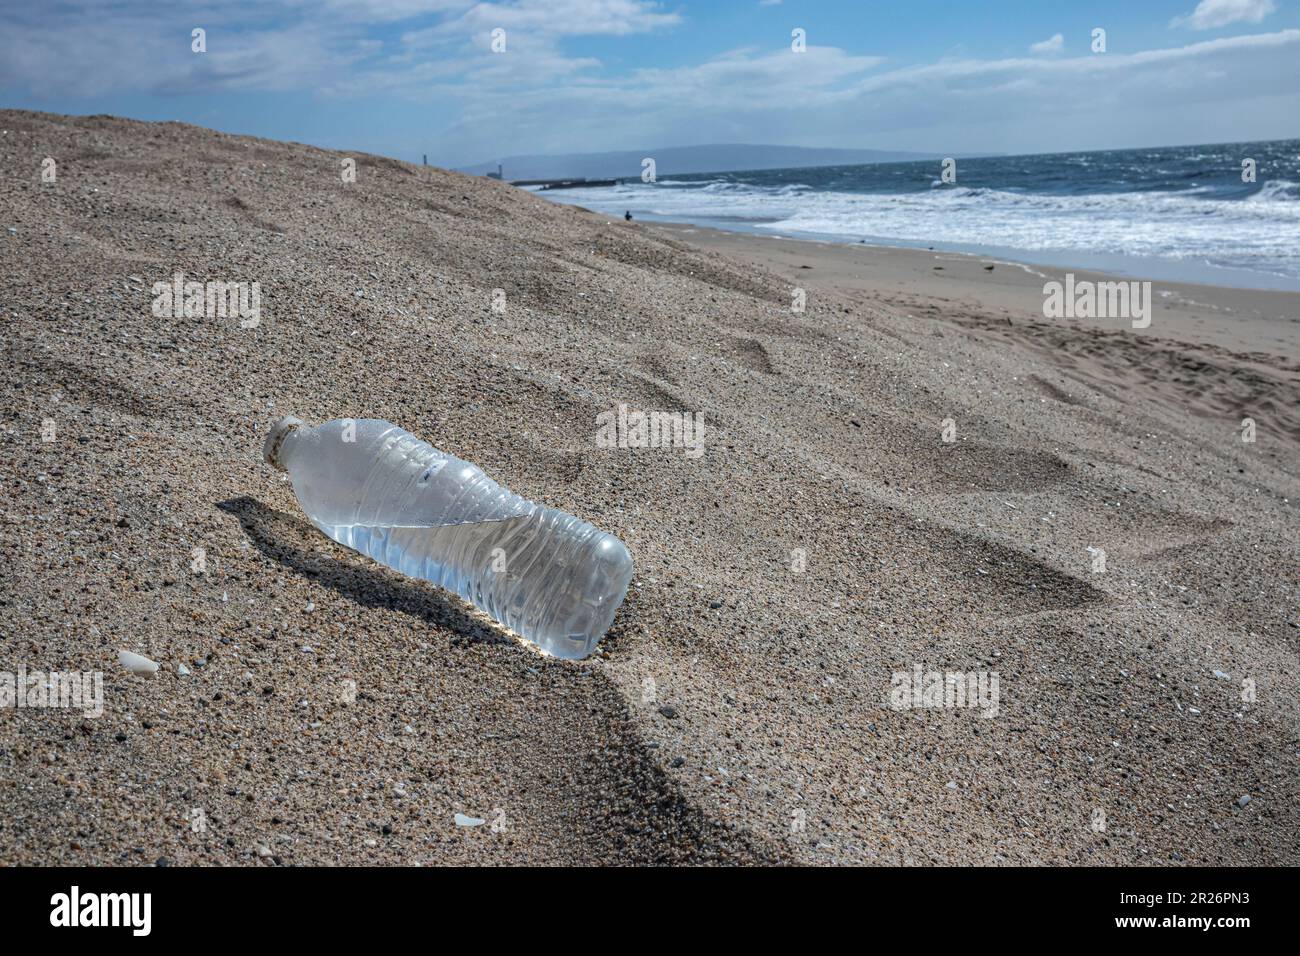 Plastic water bottle wash up on beach, Playa Del Rey, Los Angeles, California Stock Photo